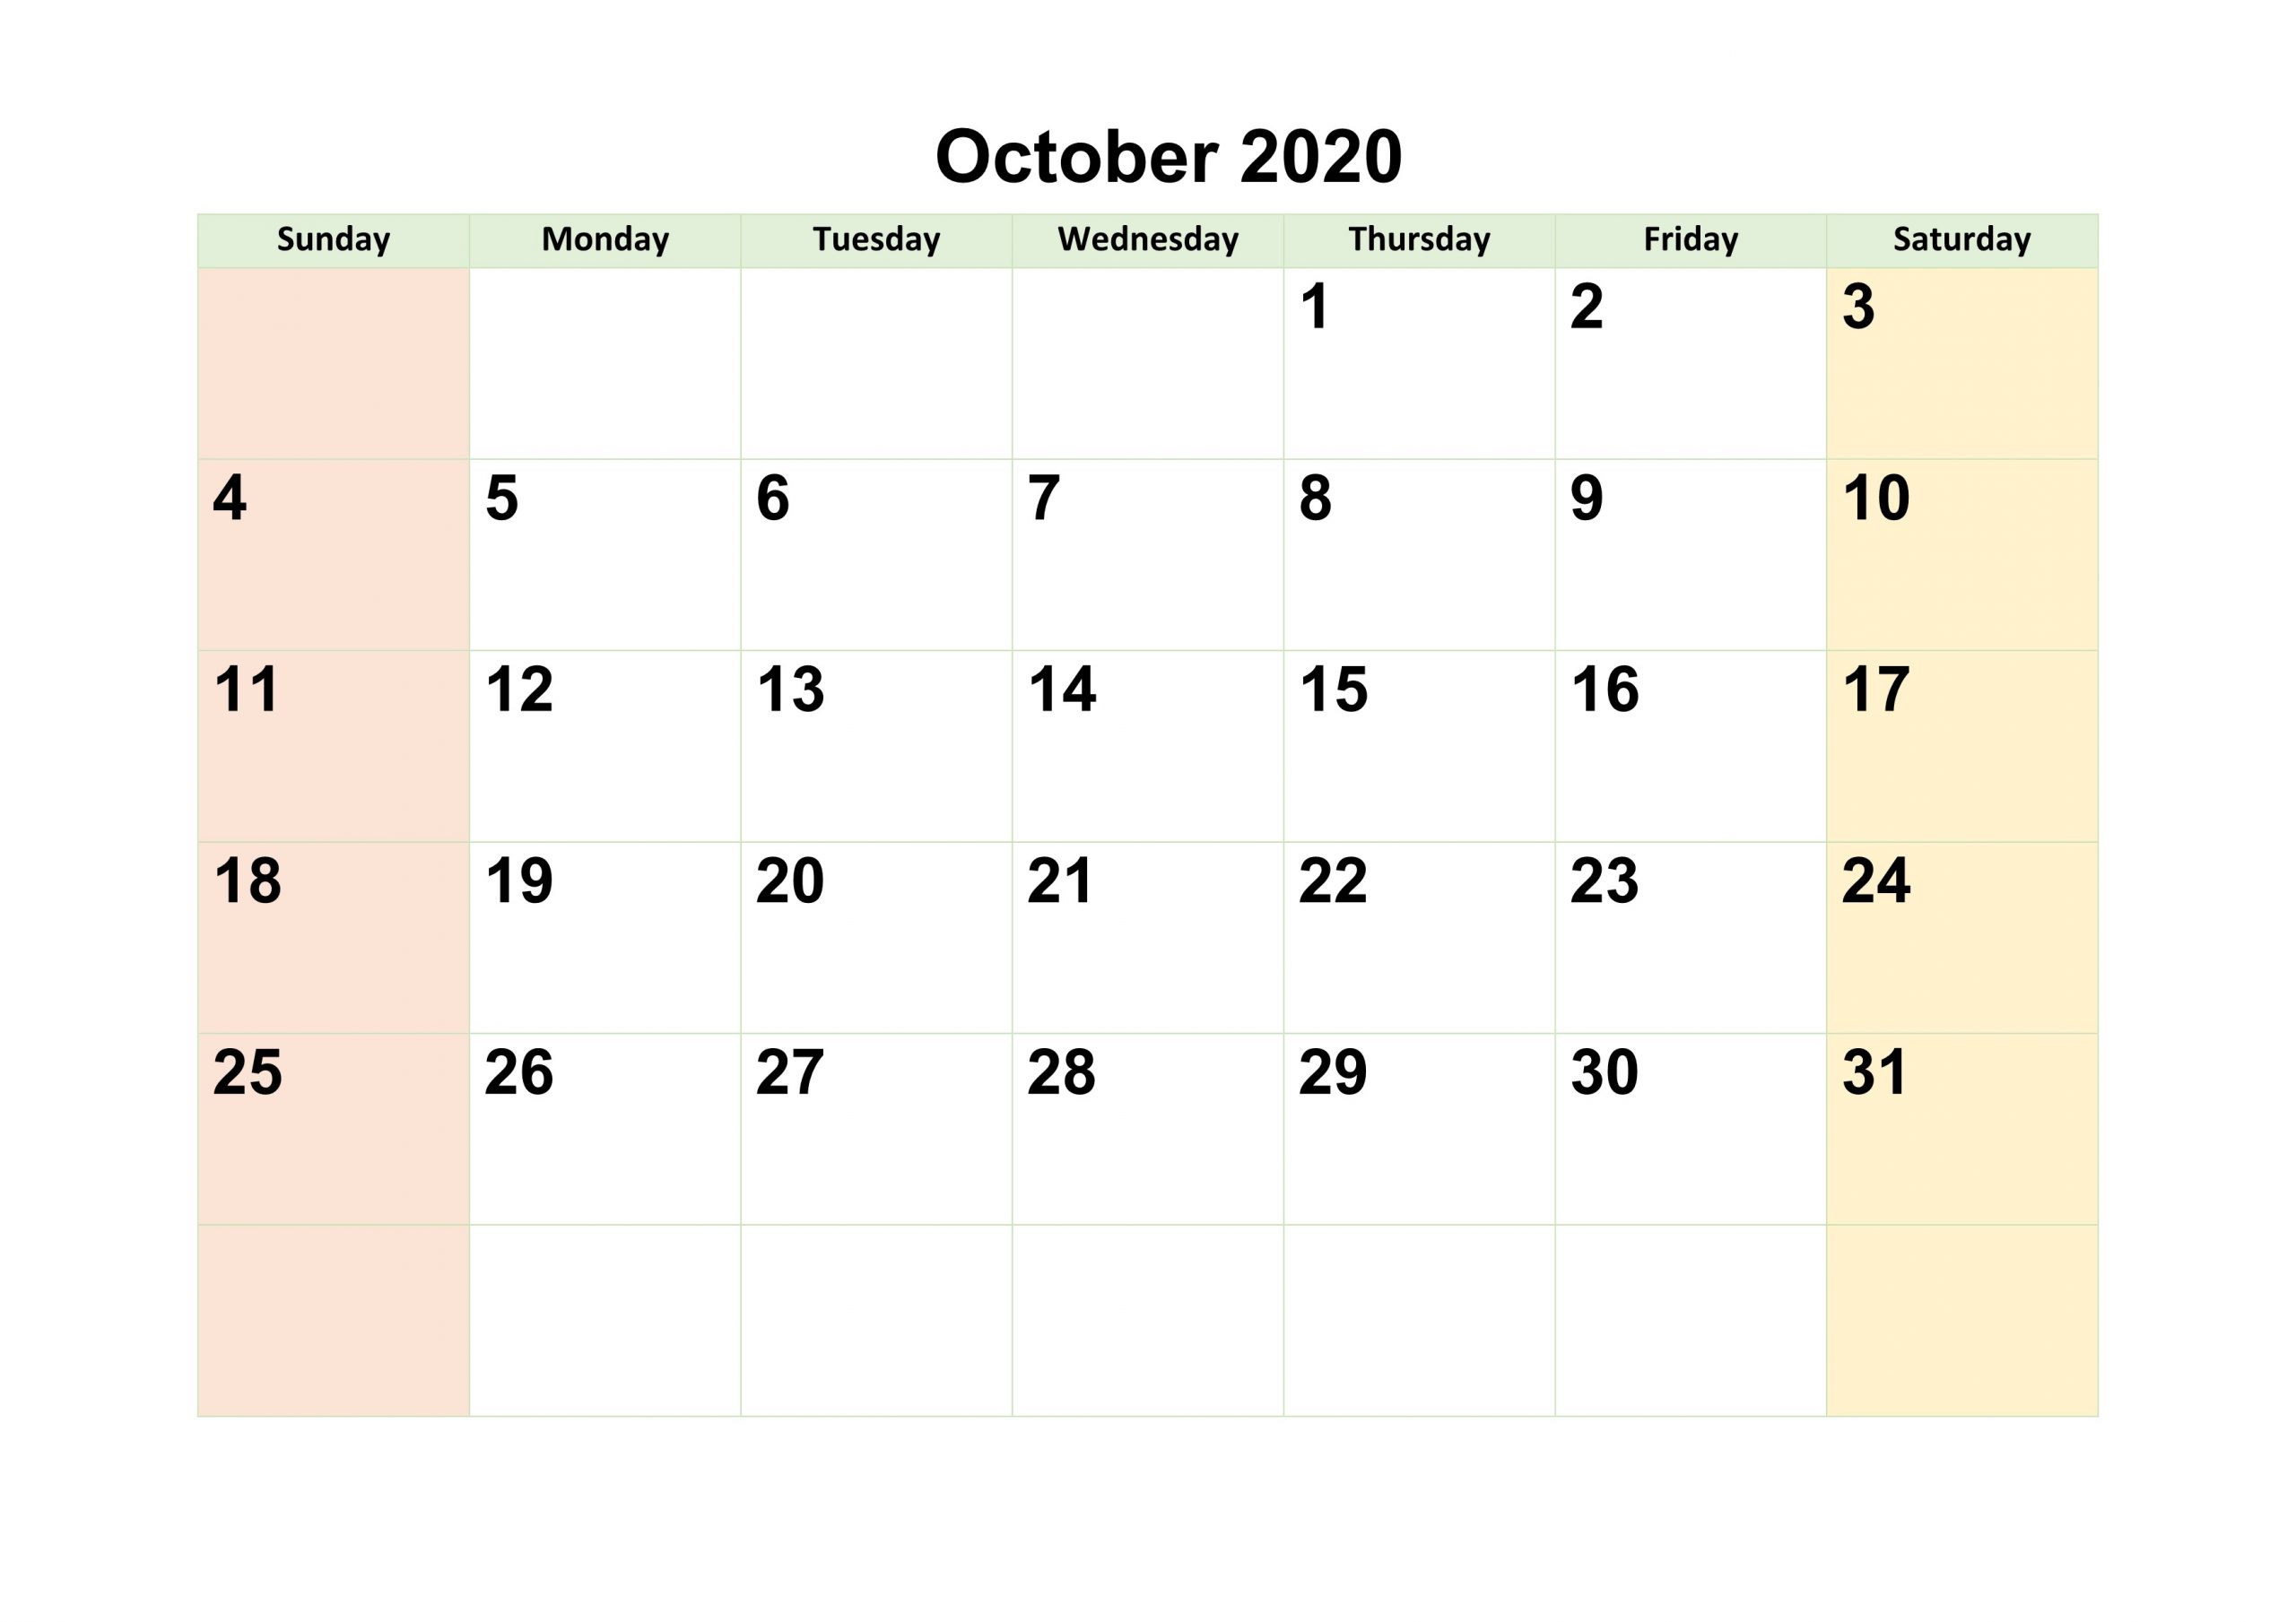 October 2020 Calendar Template